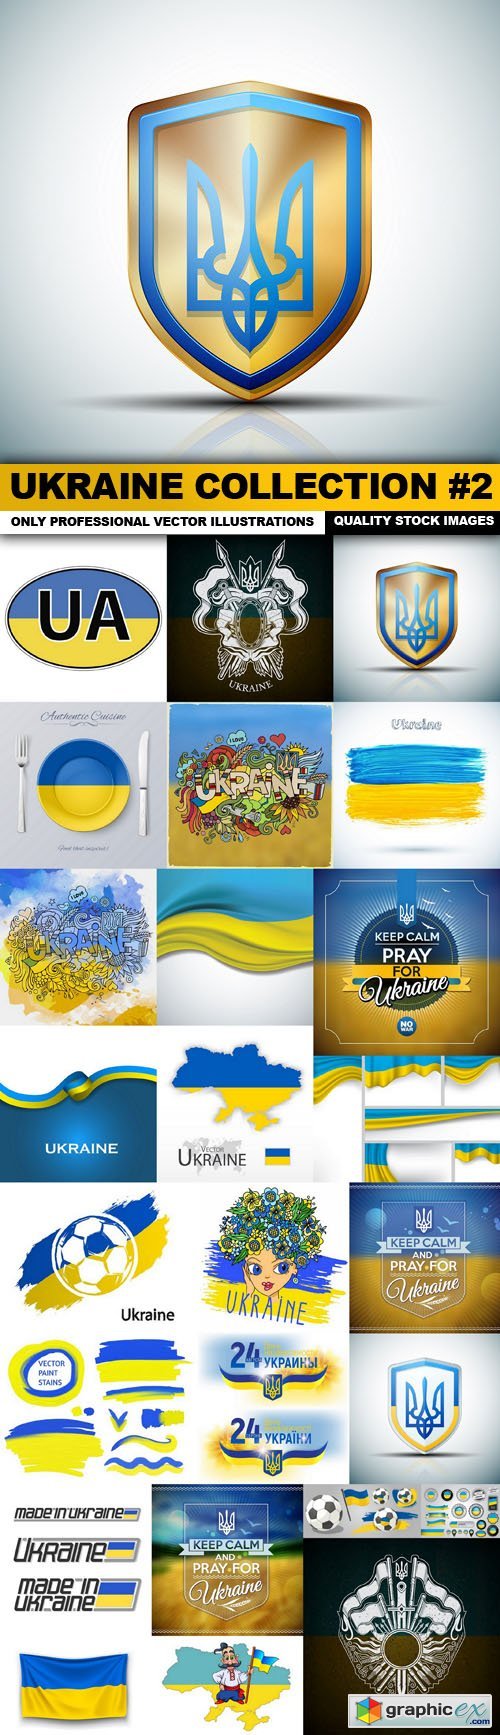 Ukraine Collection #2 - 25 Vector